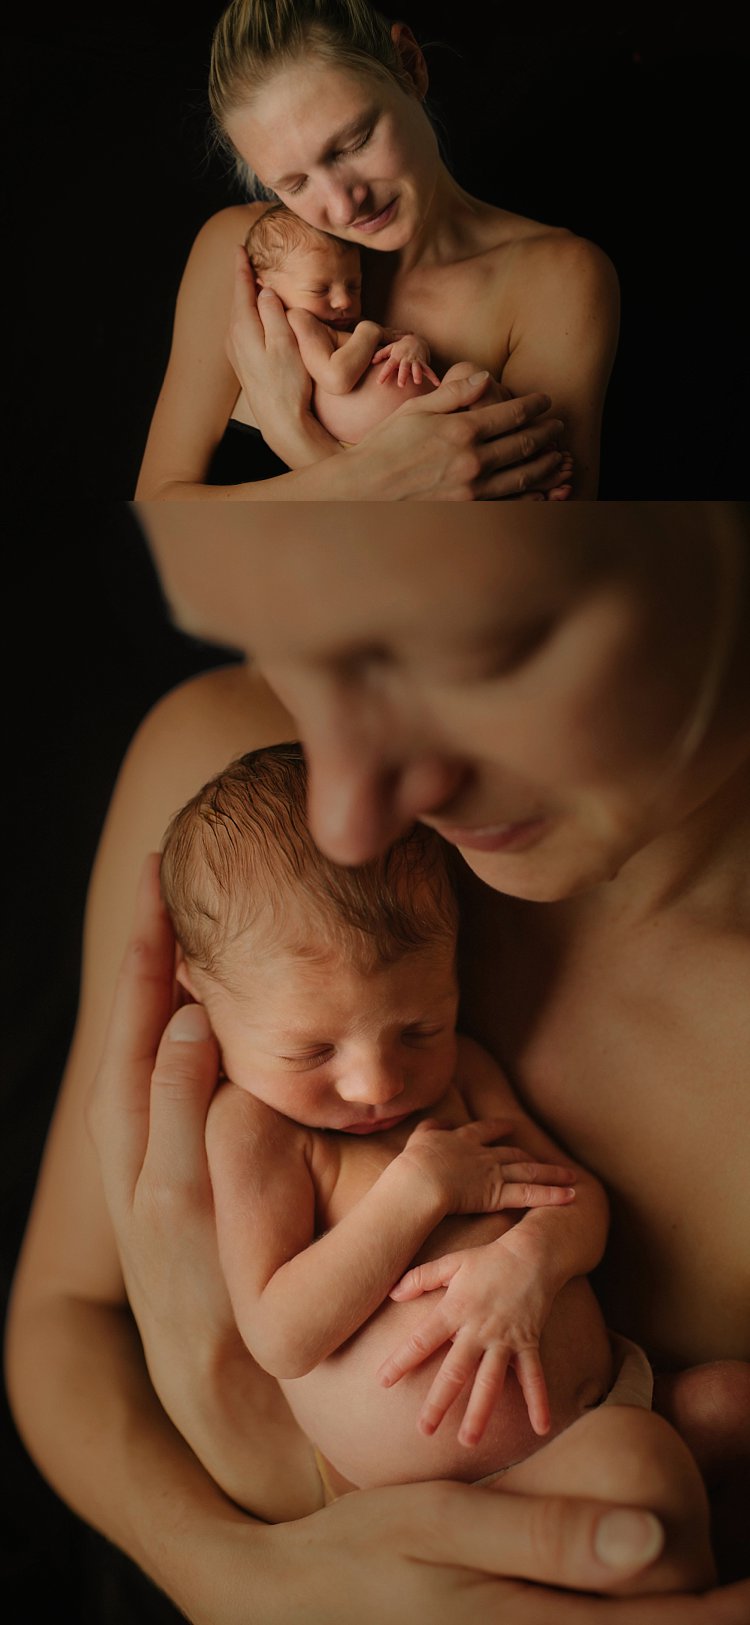 greenwich-london-newborn-twins-family-children-photographer-lily-sawyer-photo